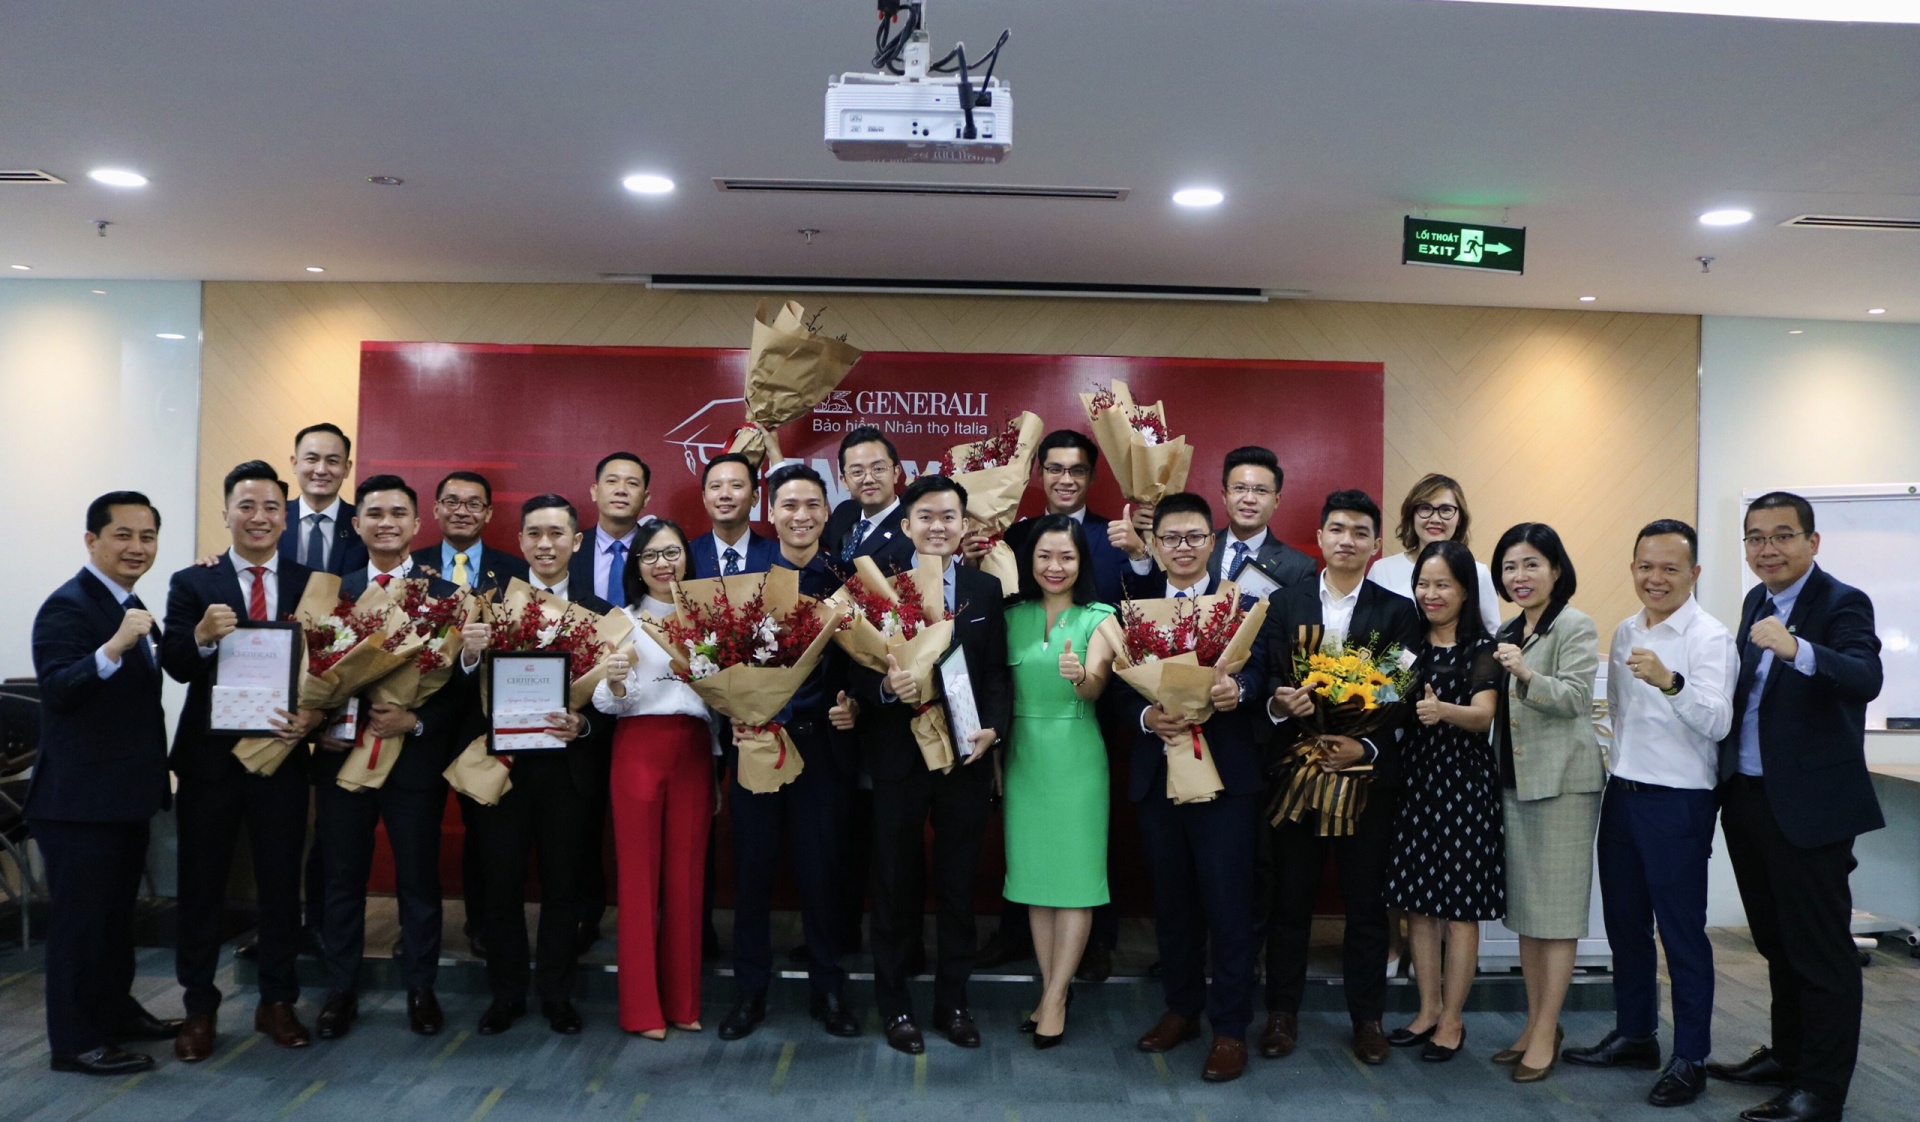 Generali named in Top 100 Vietnam Best Places to Work 2021